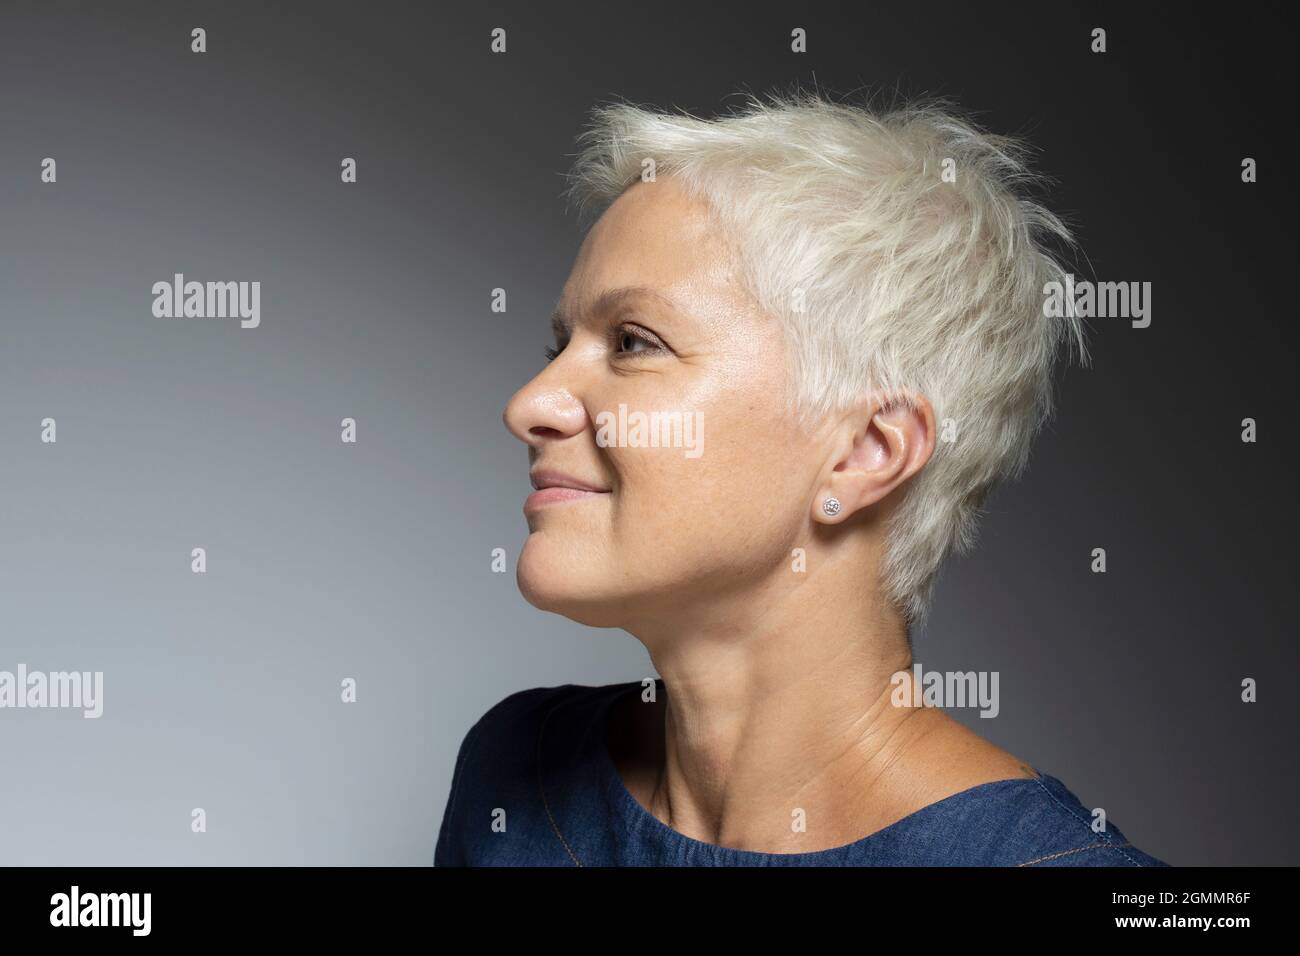 Profile portrait beautiful mature woman with short white hair Stock Photo